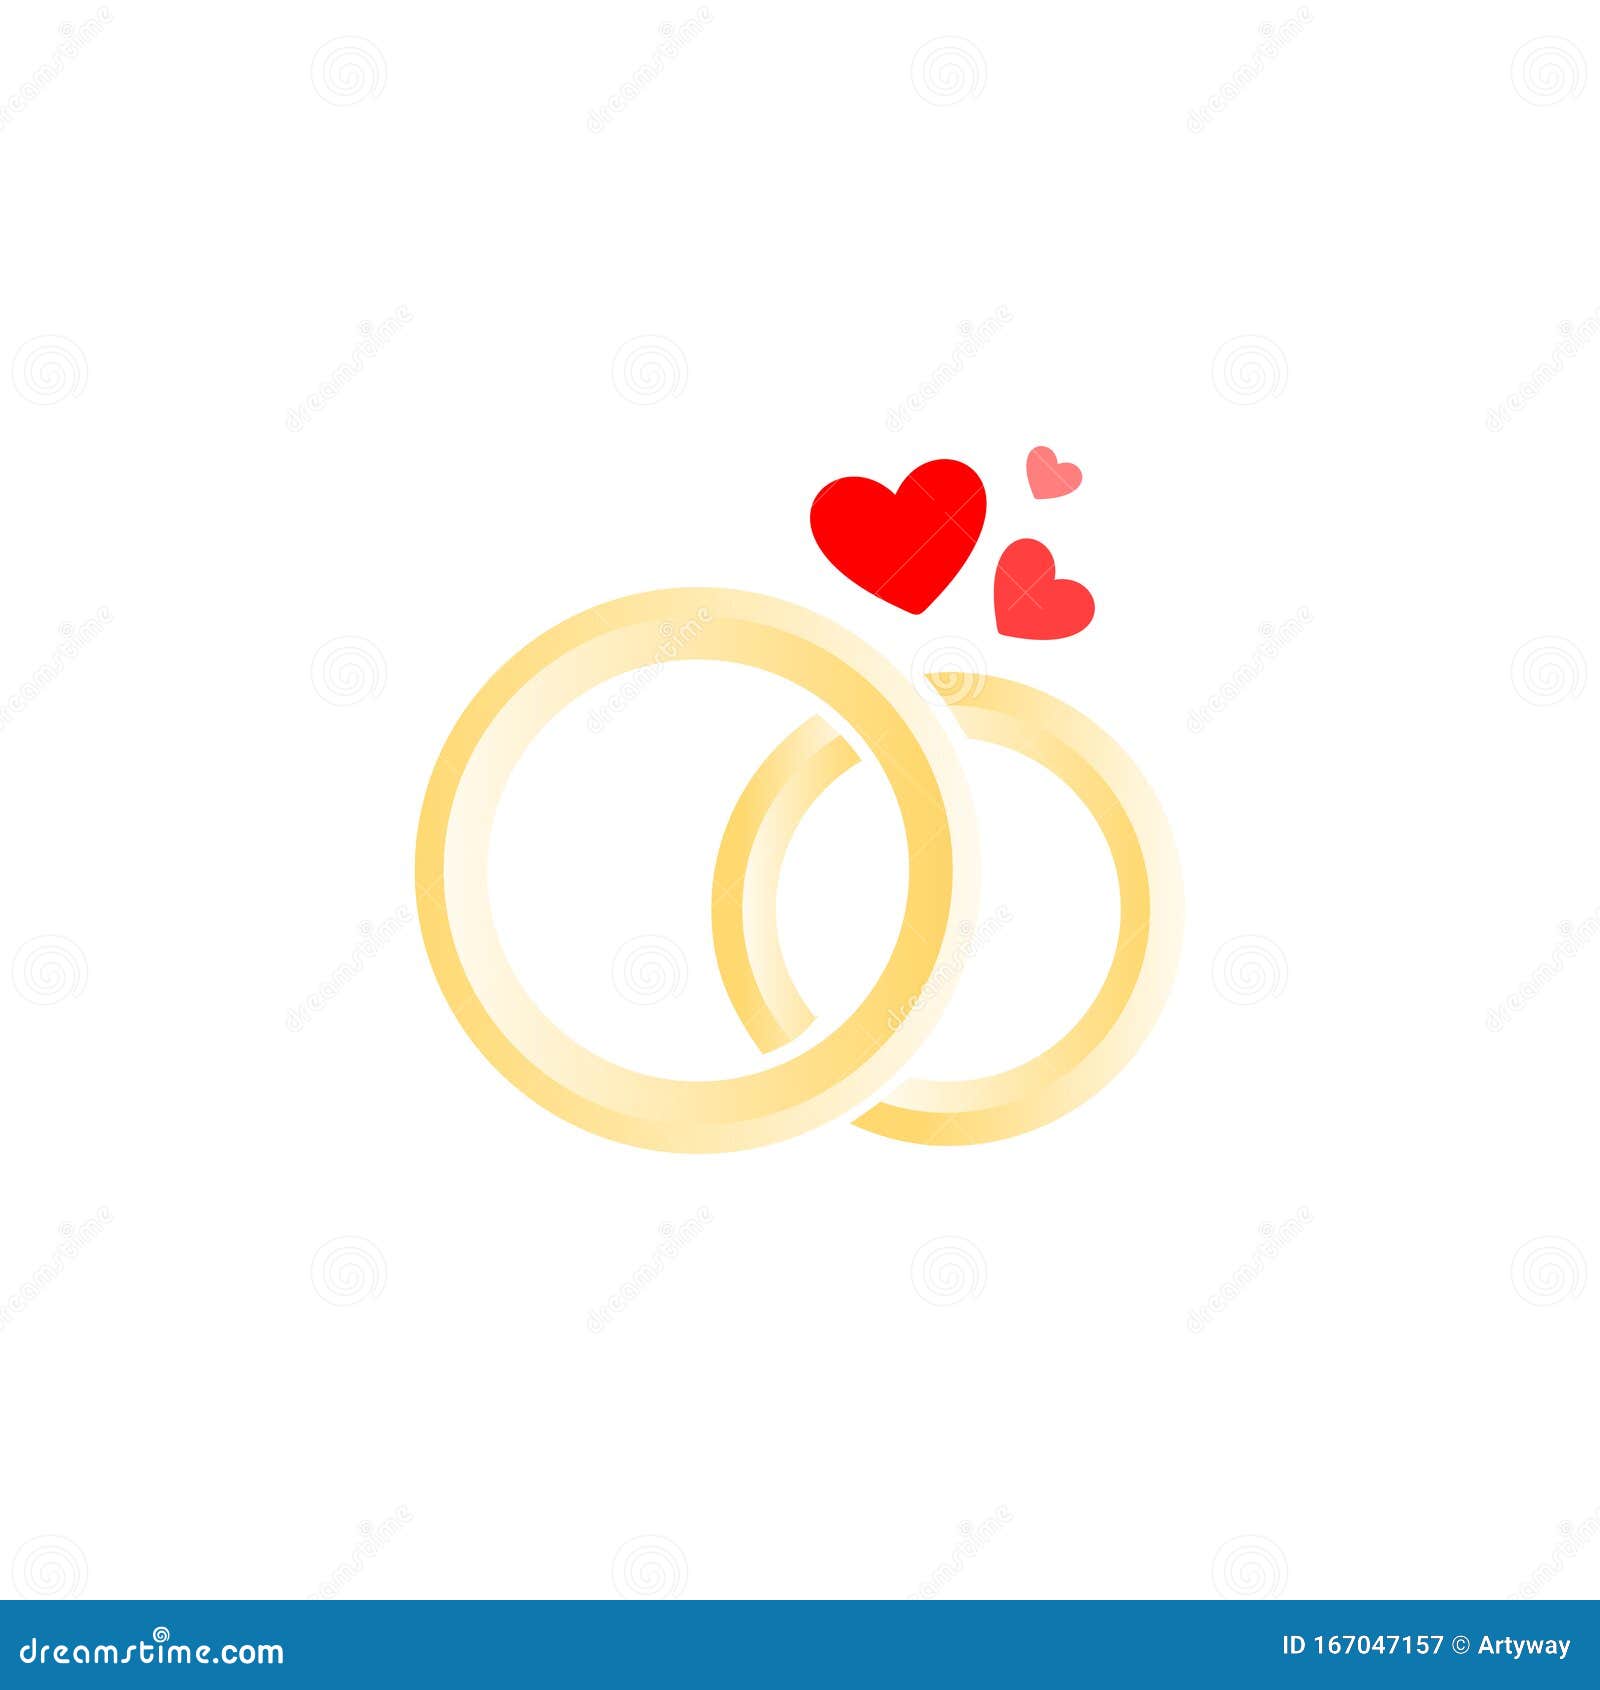 Wedding rings icon logo template design eps 10 Vector Image